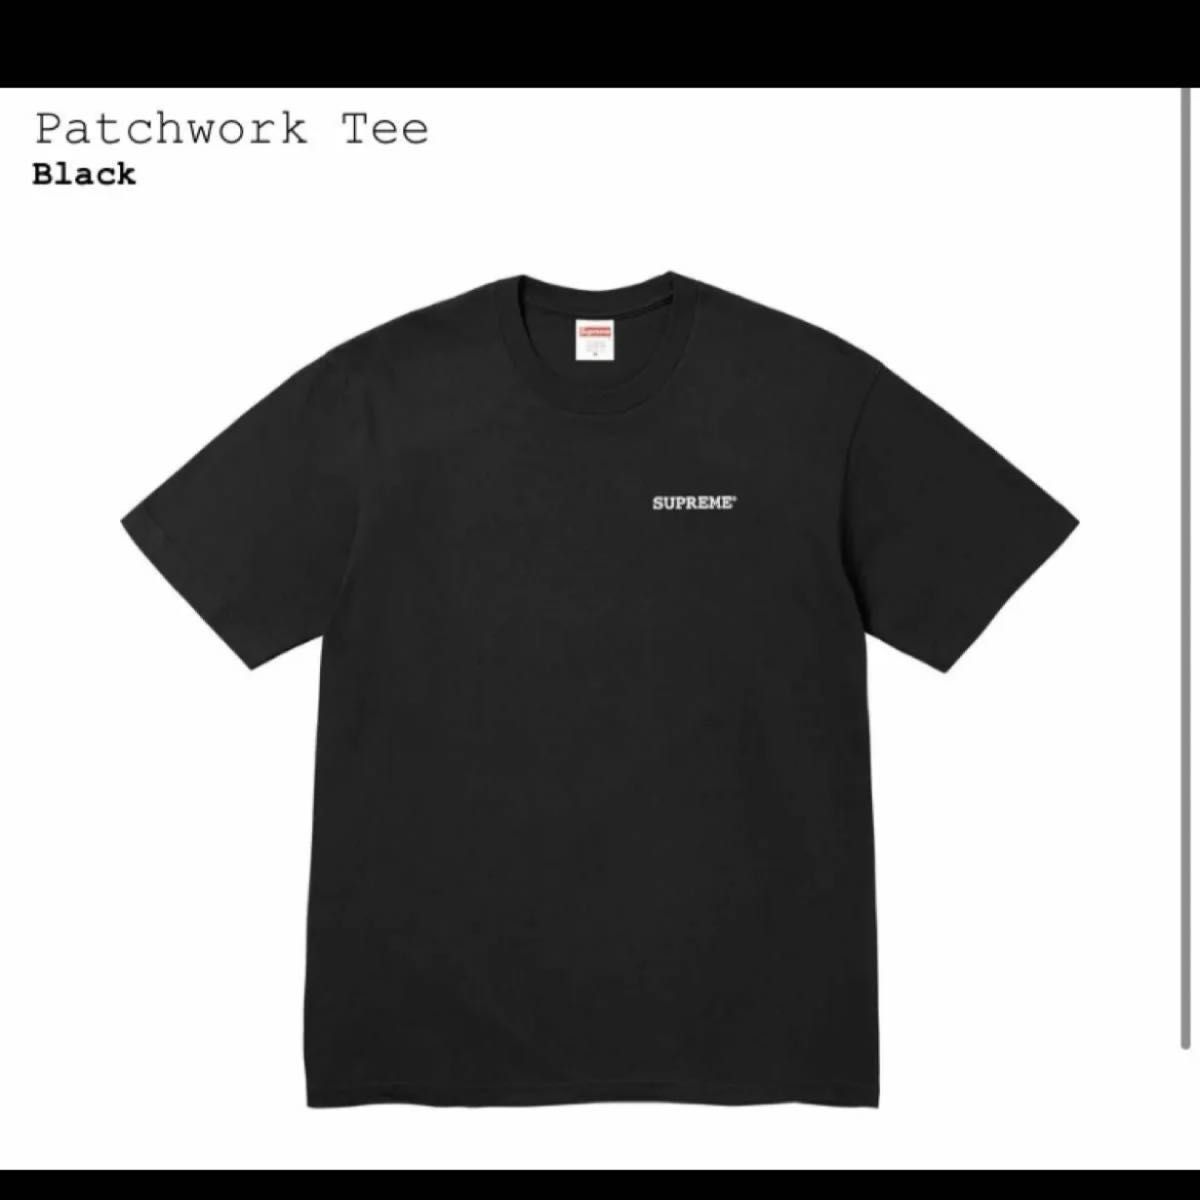 Supreme Patchwork Tee "Black"シュプリーム パッチワーク Tシャツ "ブラック"